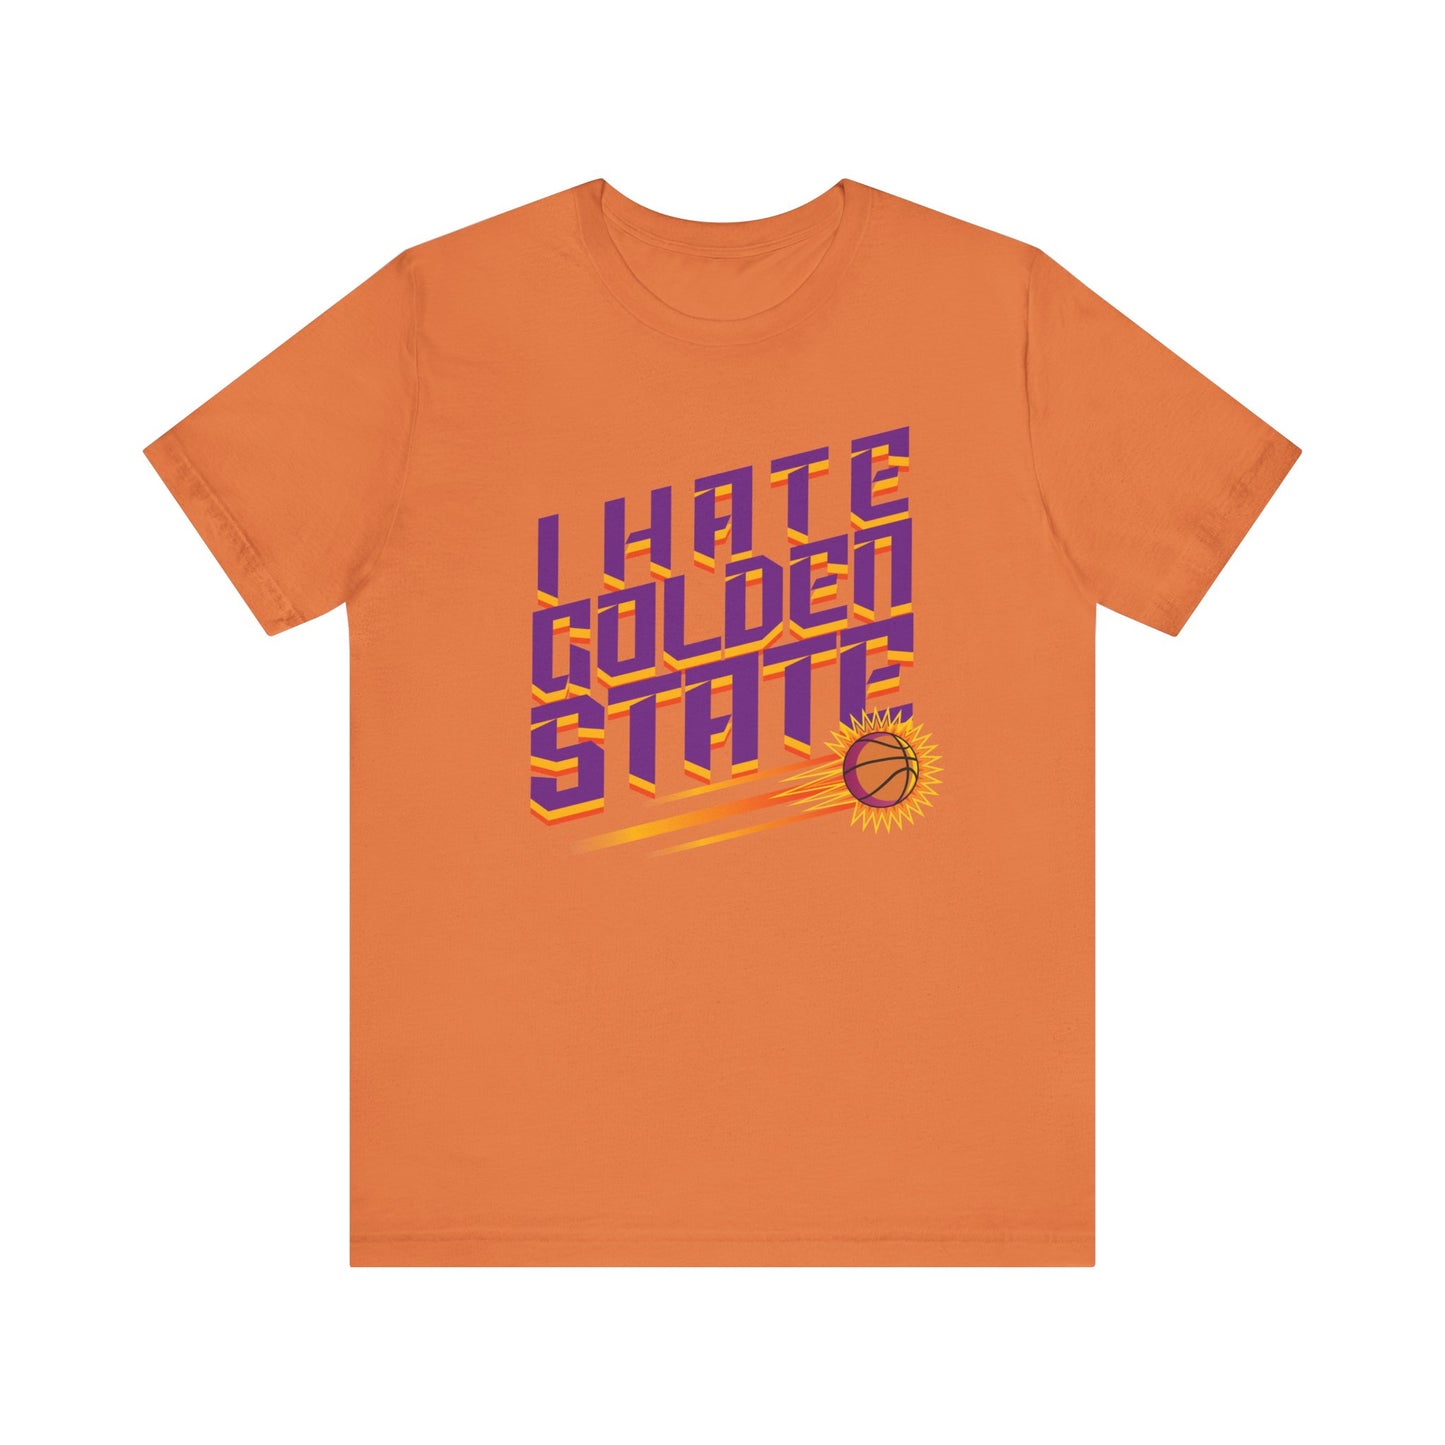 I Hate Gold En State (for Phoenix fans) - Unisex Jersey Short Sleeve Tee